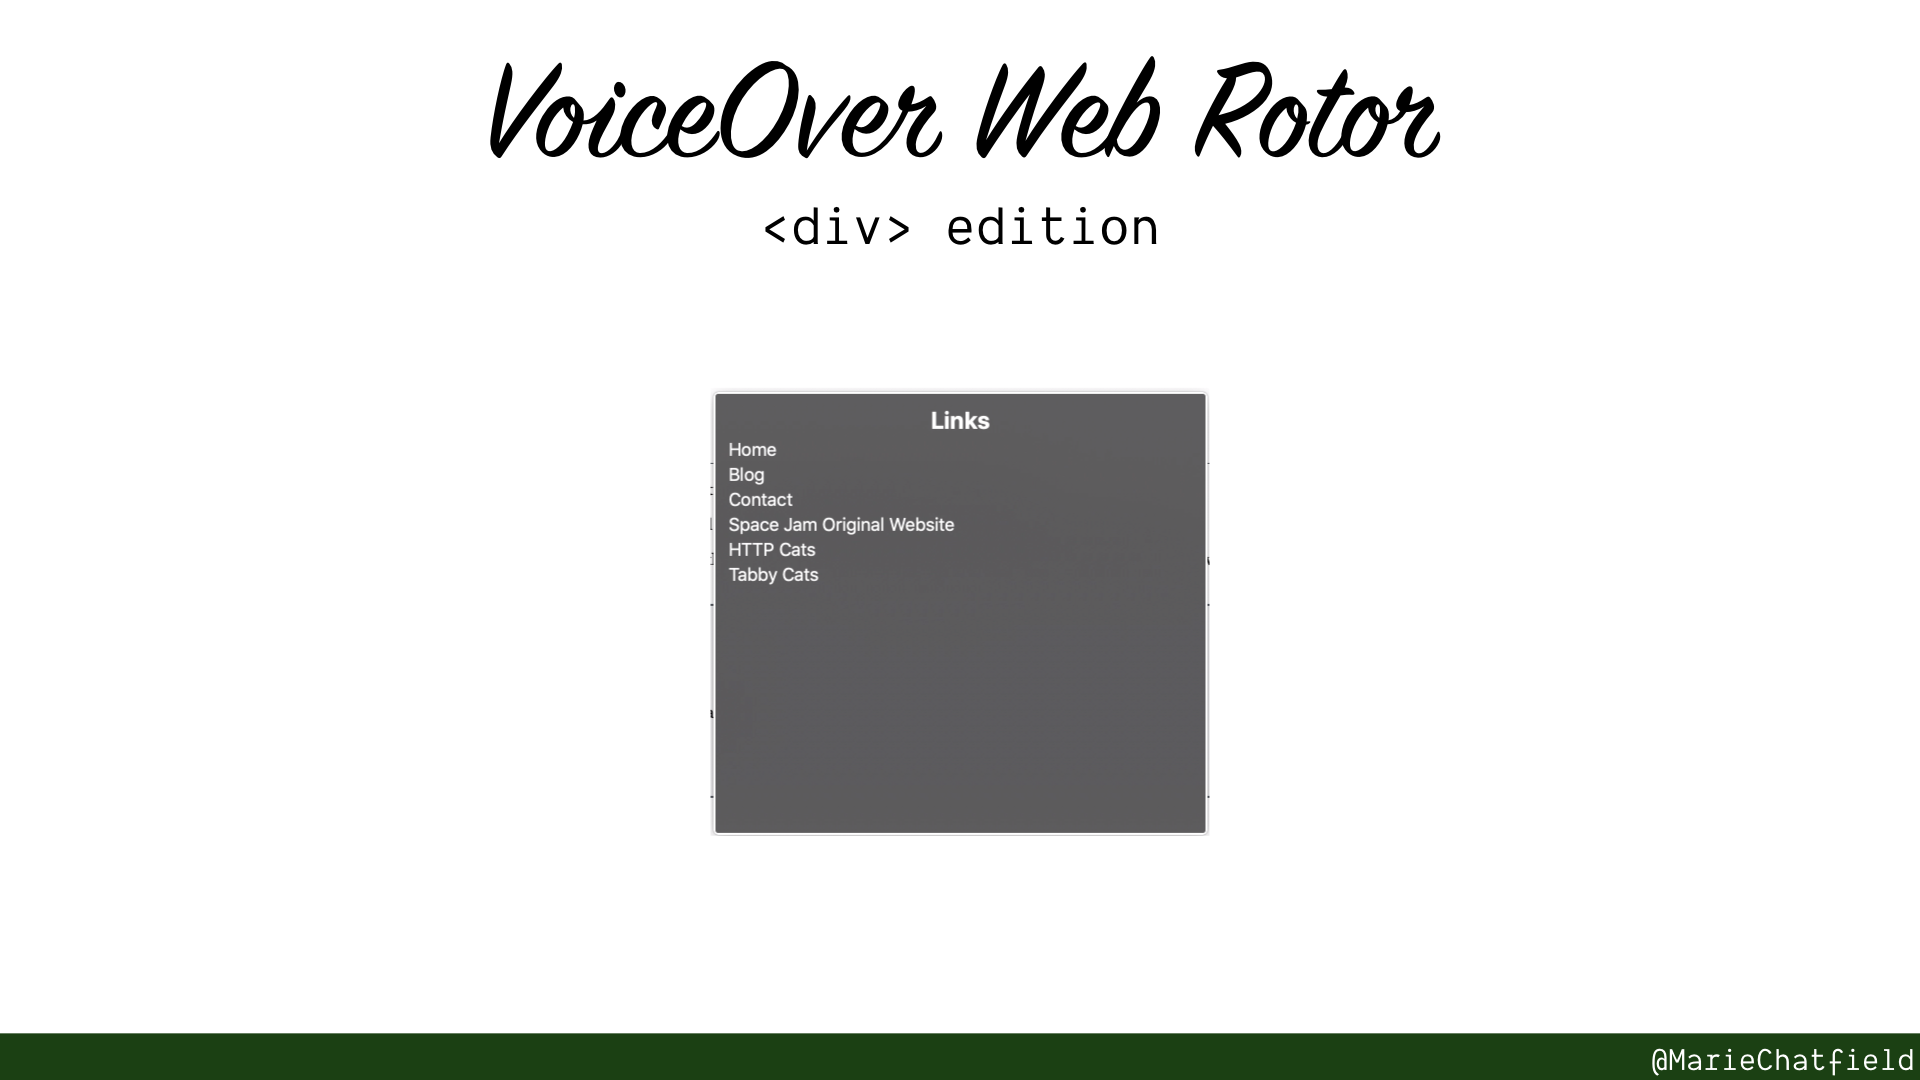 Slide showing VoiceOver Web Rotor for div version